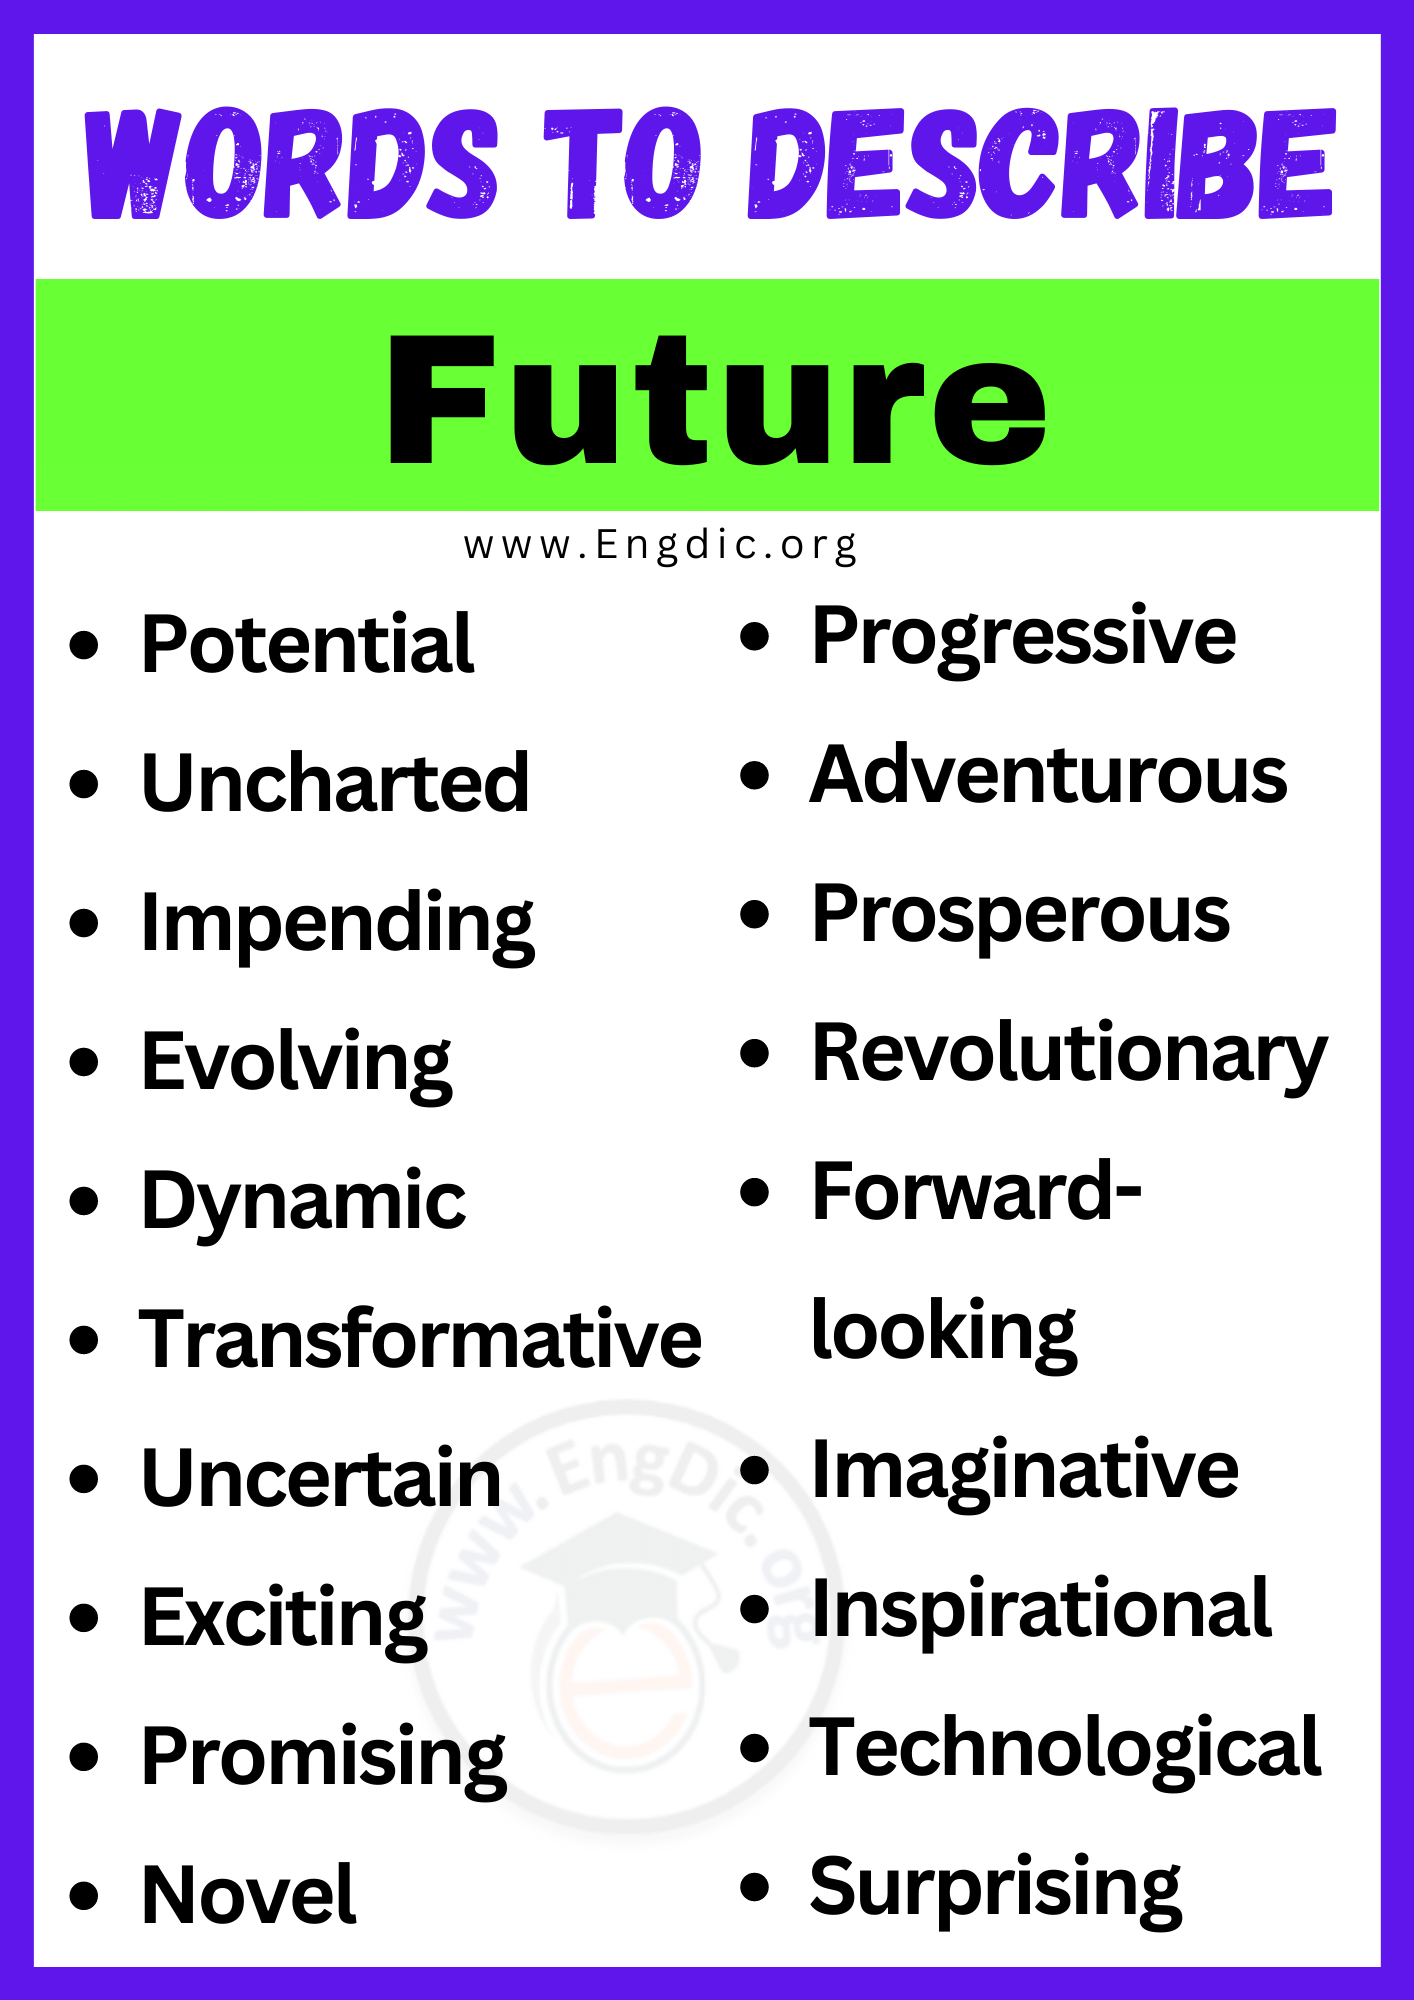 Words to Describe Futur